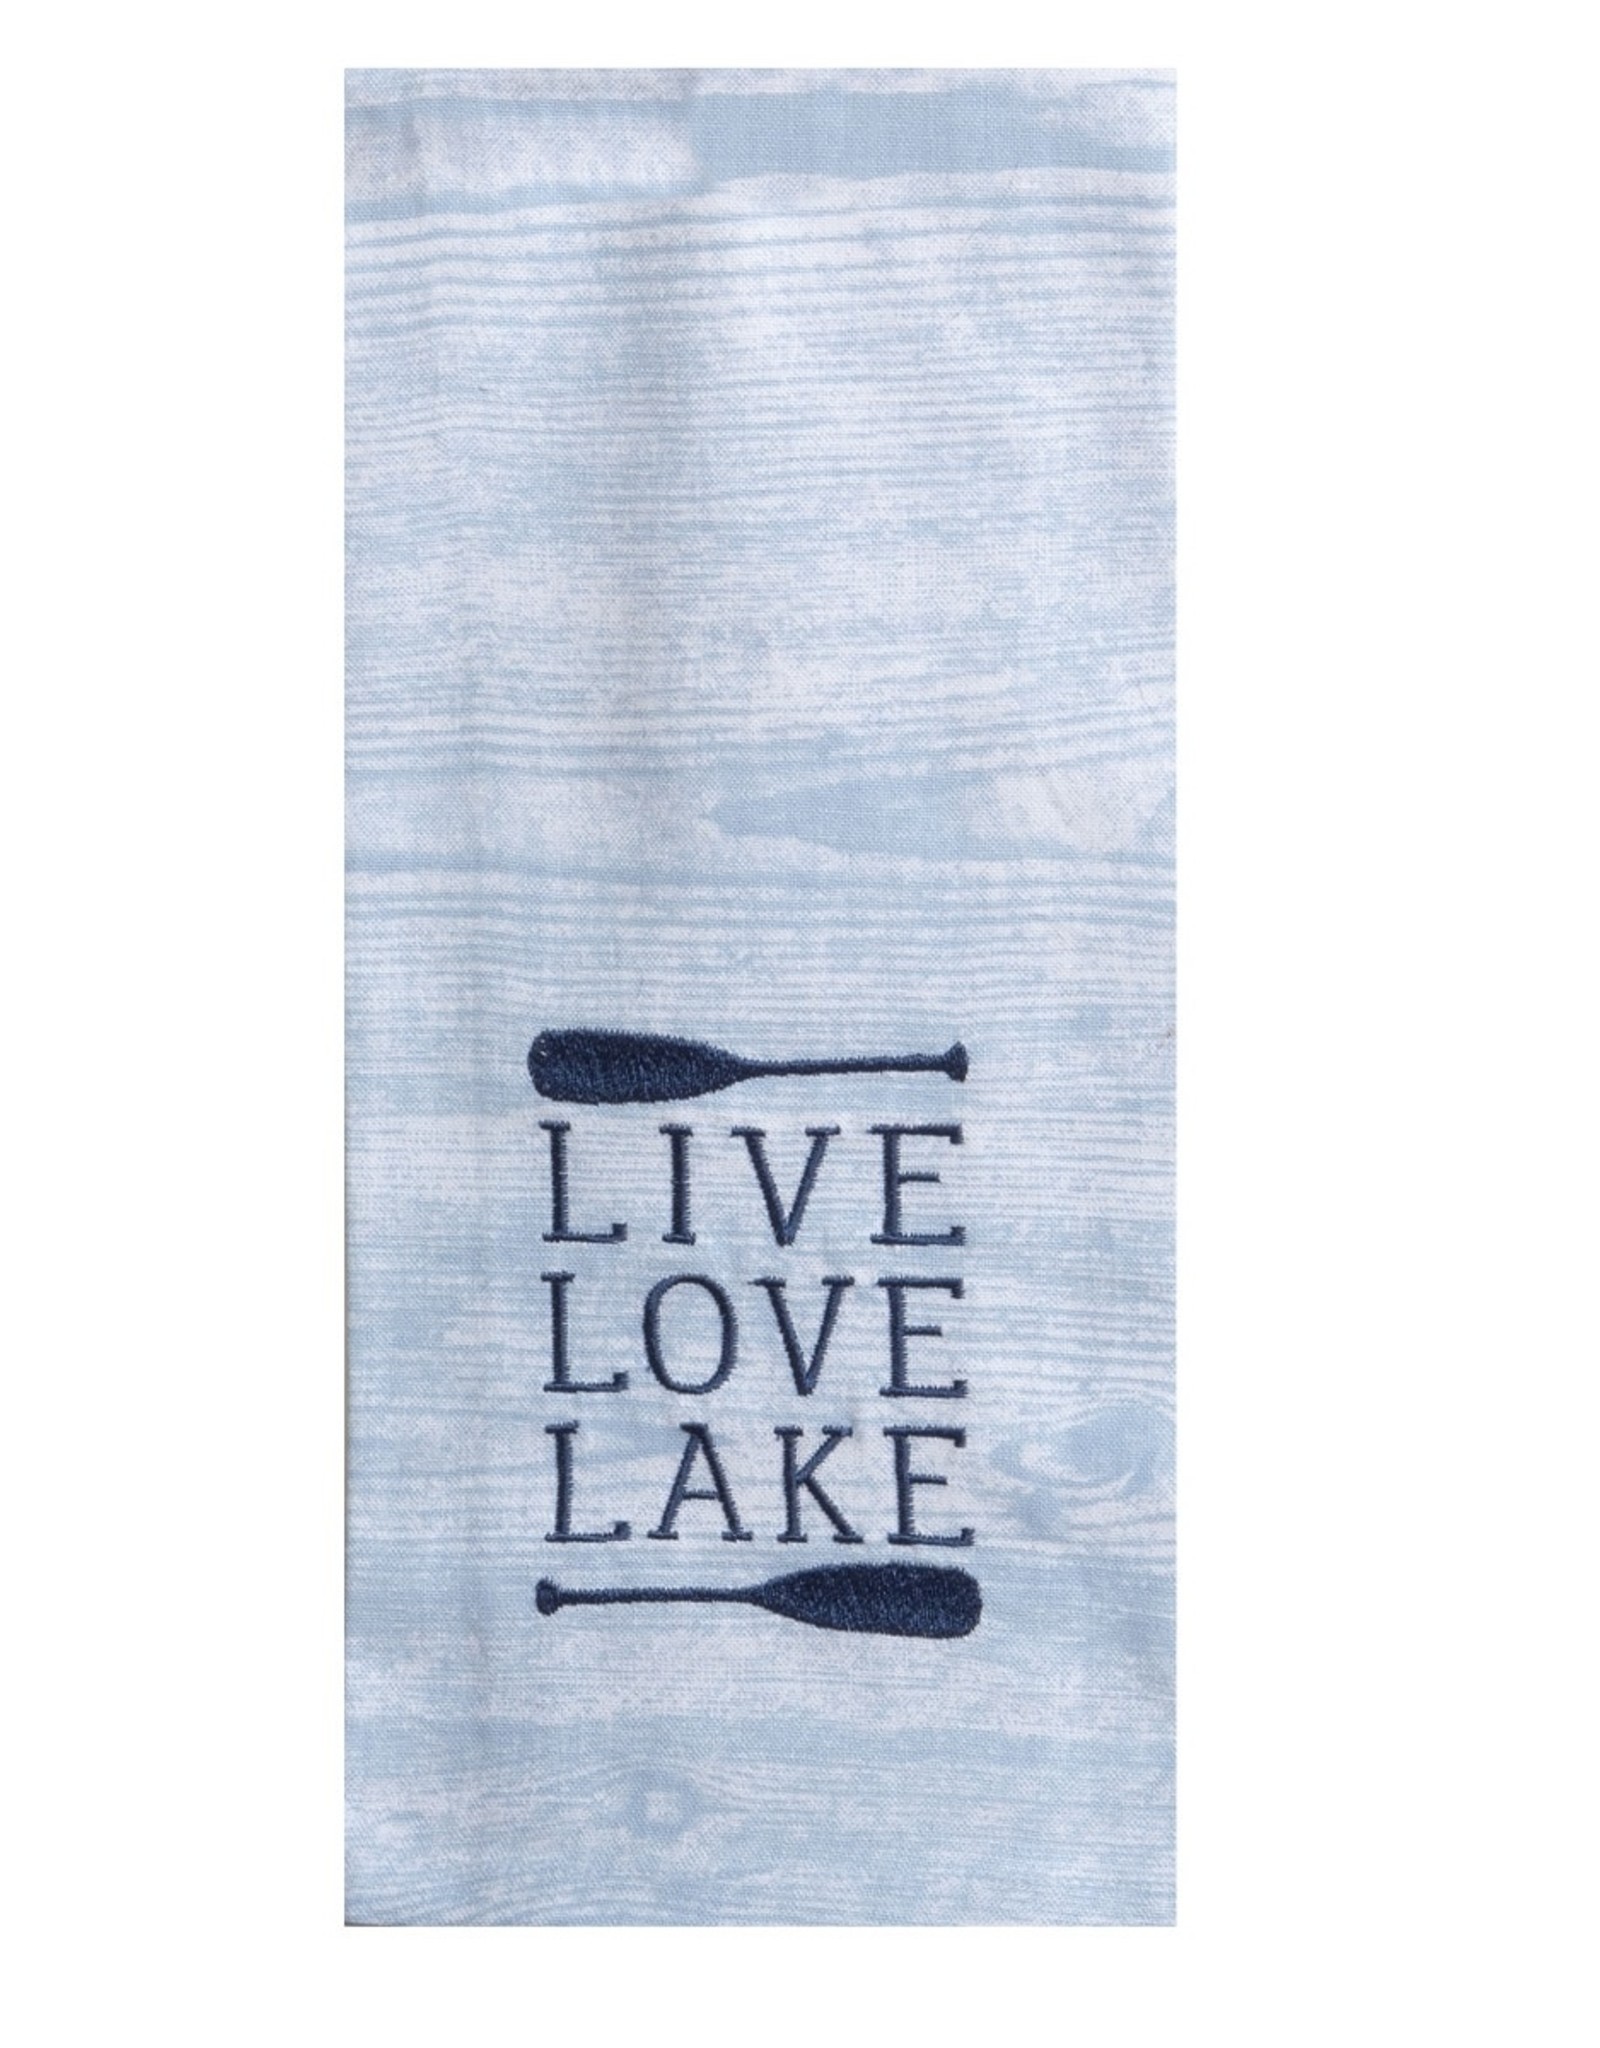 Kay Dee Design LIVE LOVE LAKE  TEA TOWEL - embroidered